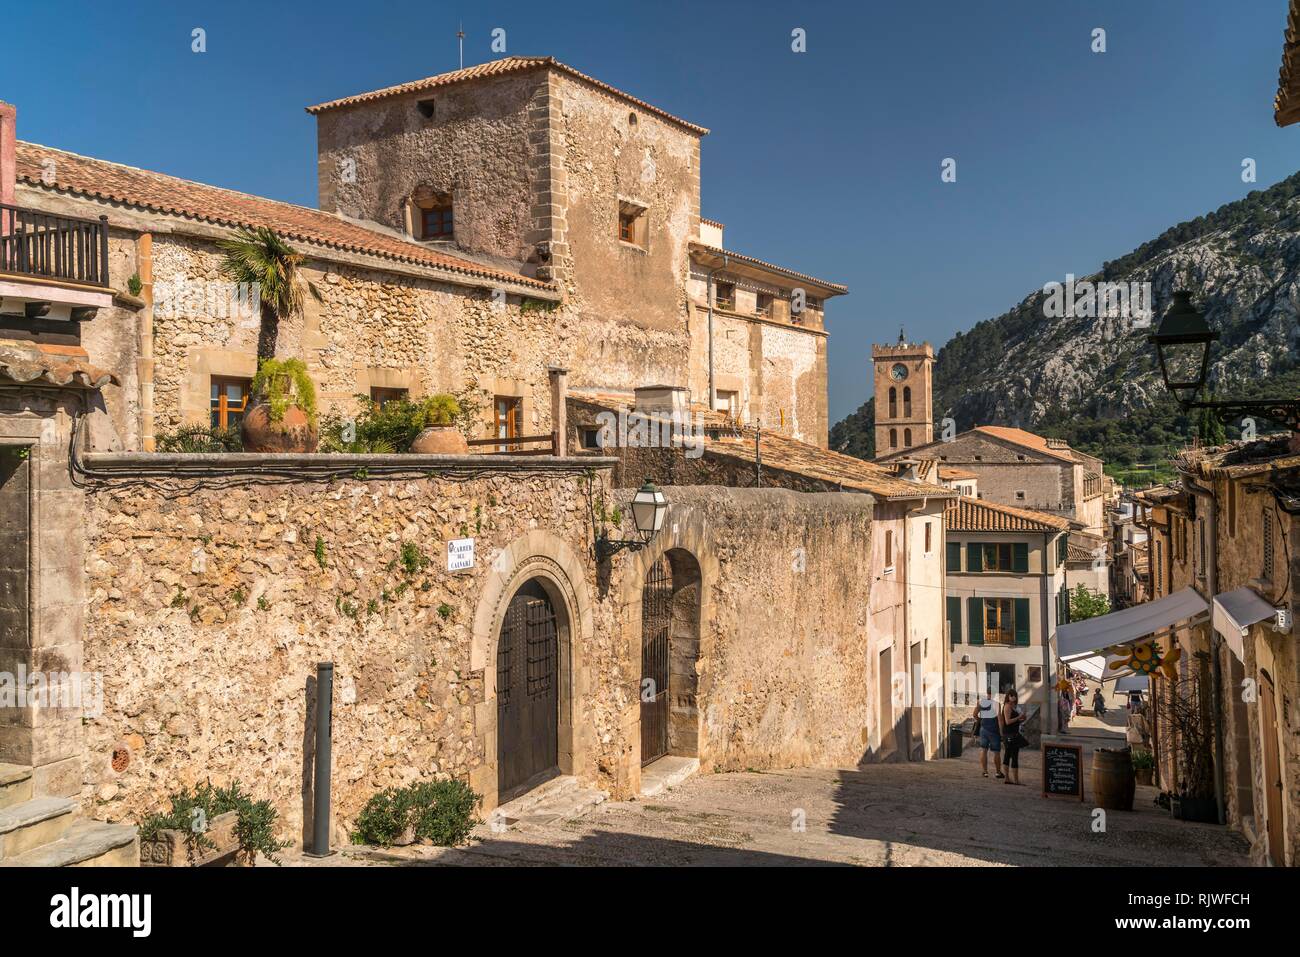 Lane in Old Town, Pollenca, Majorca, Balearic Islands, Spain Stock Photo